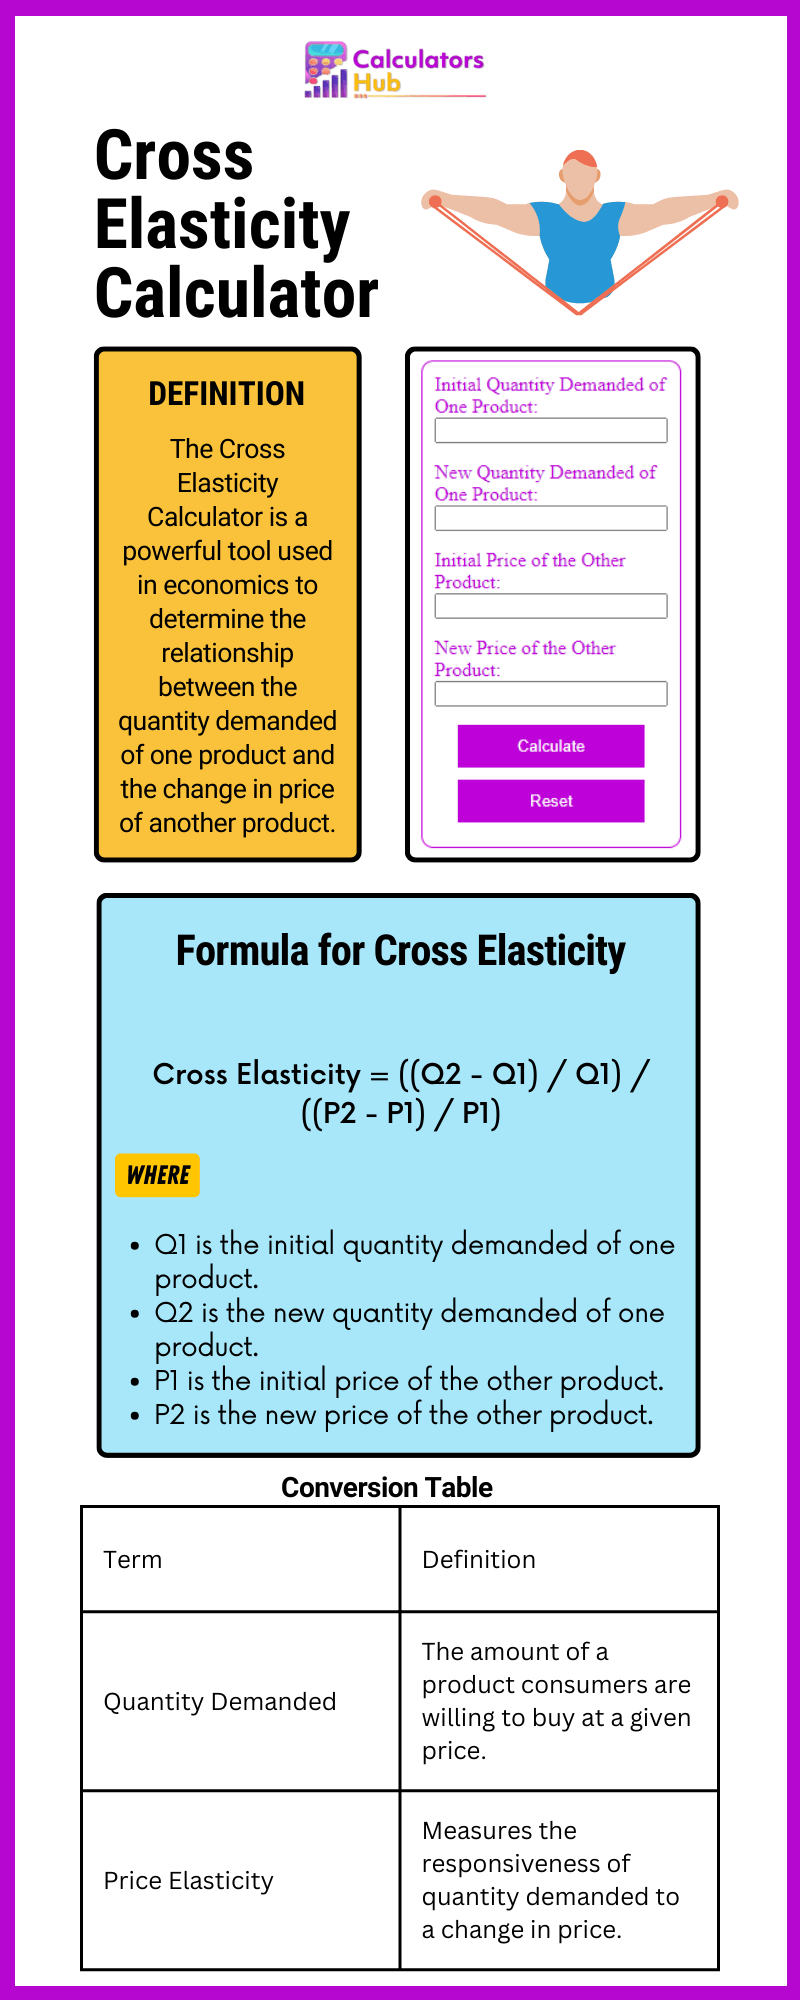 Cross Elasticity Calculator